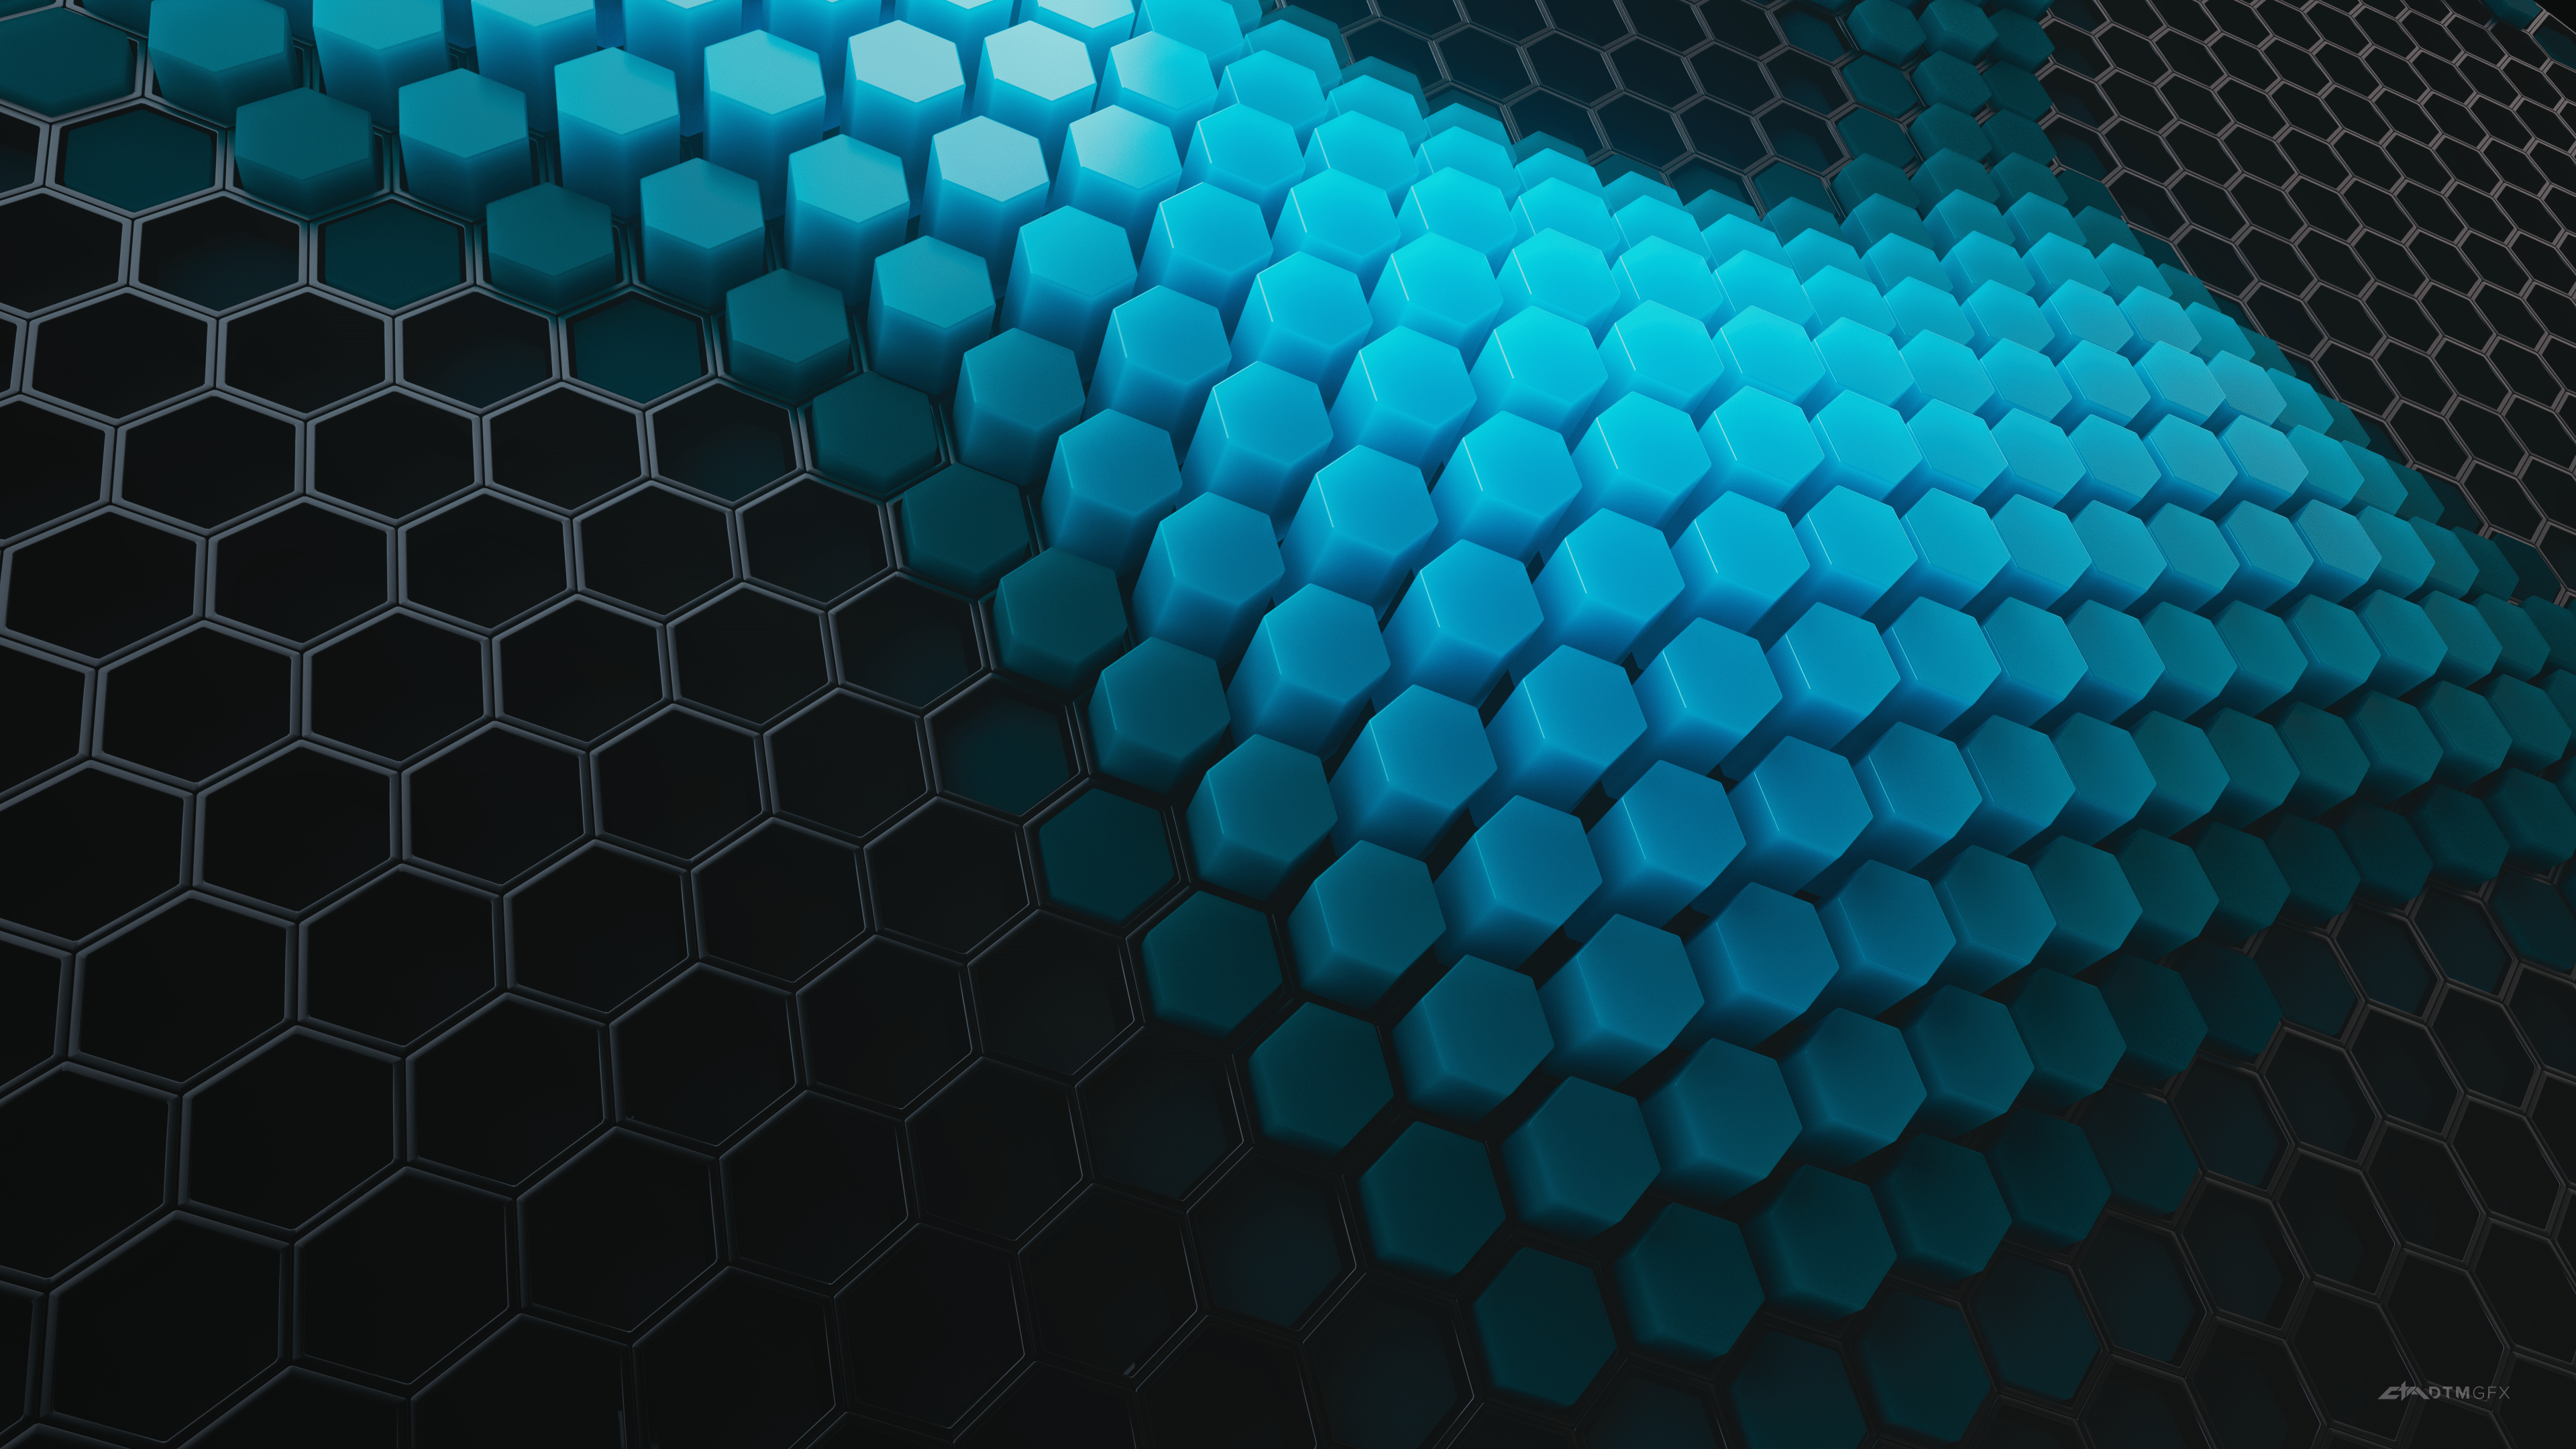 A blue and black hexagonal background - Cyan